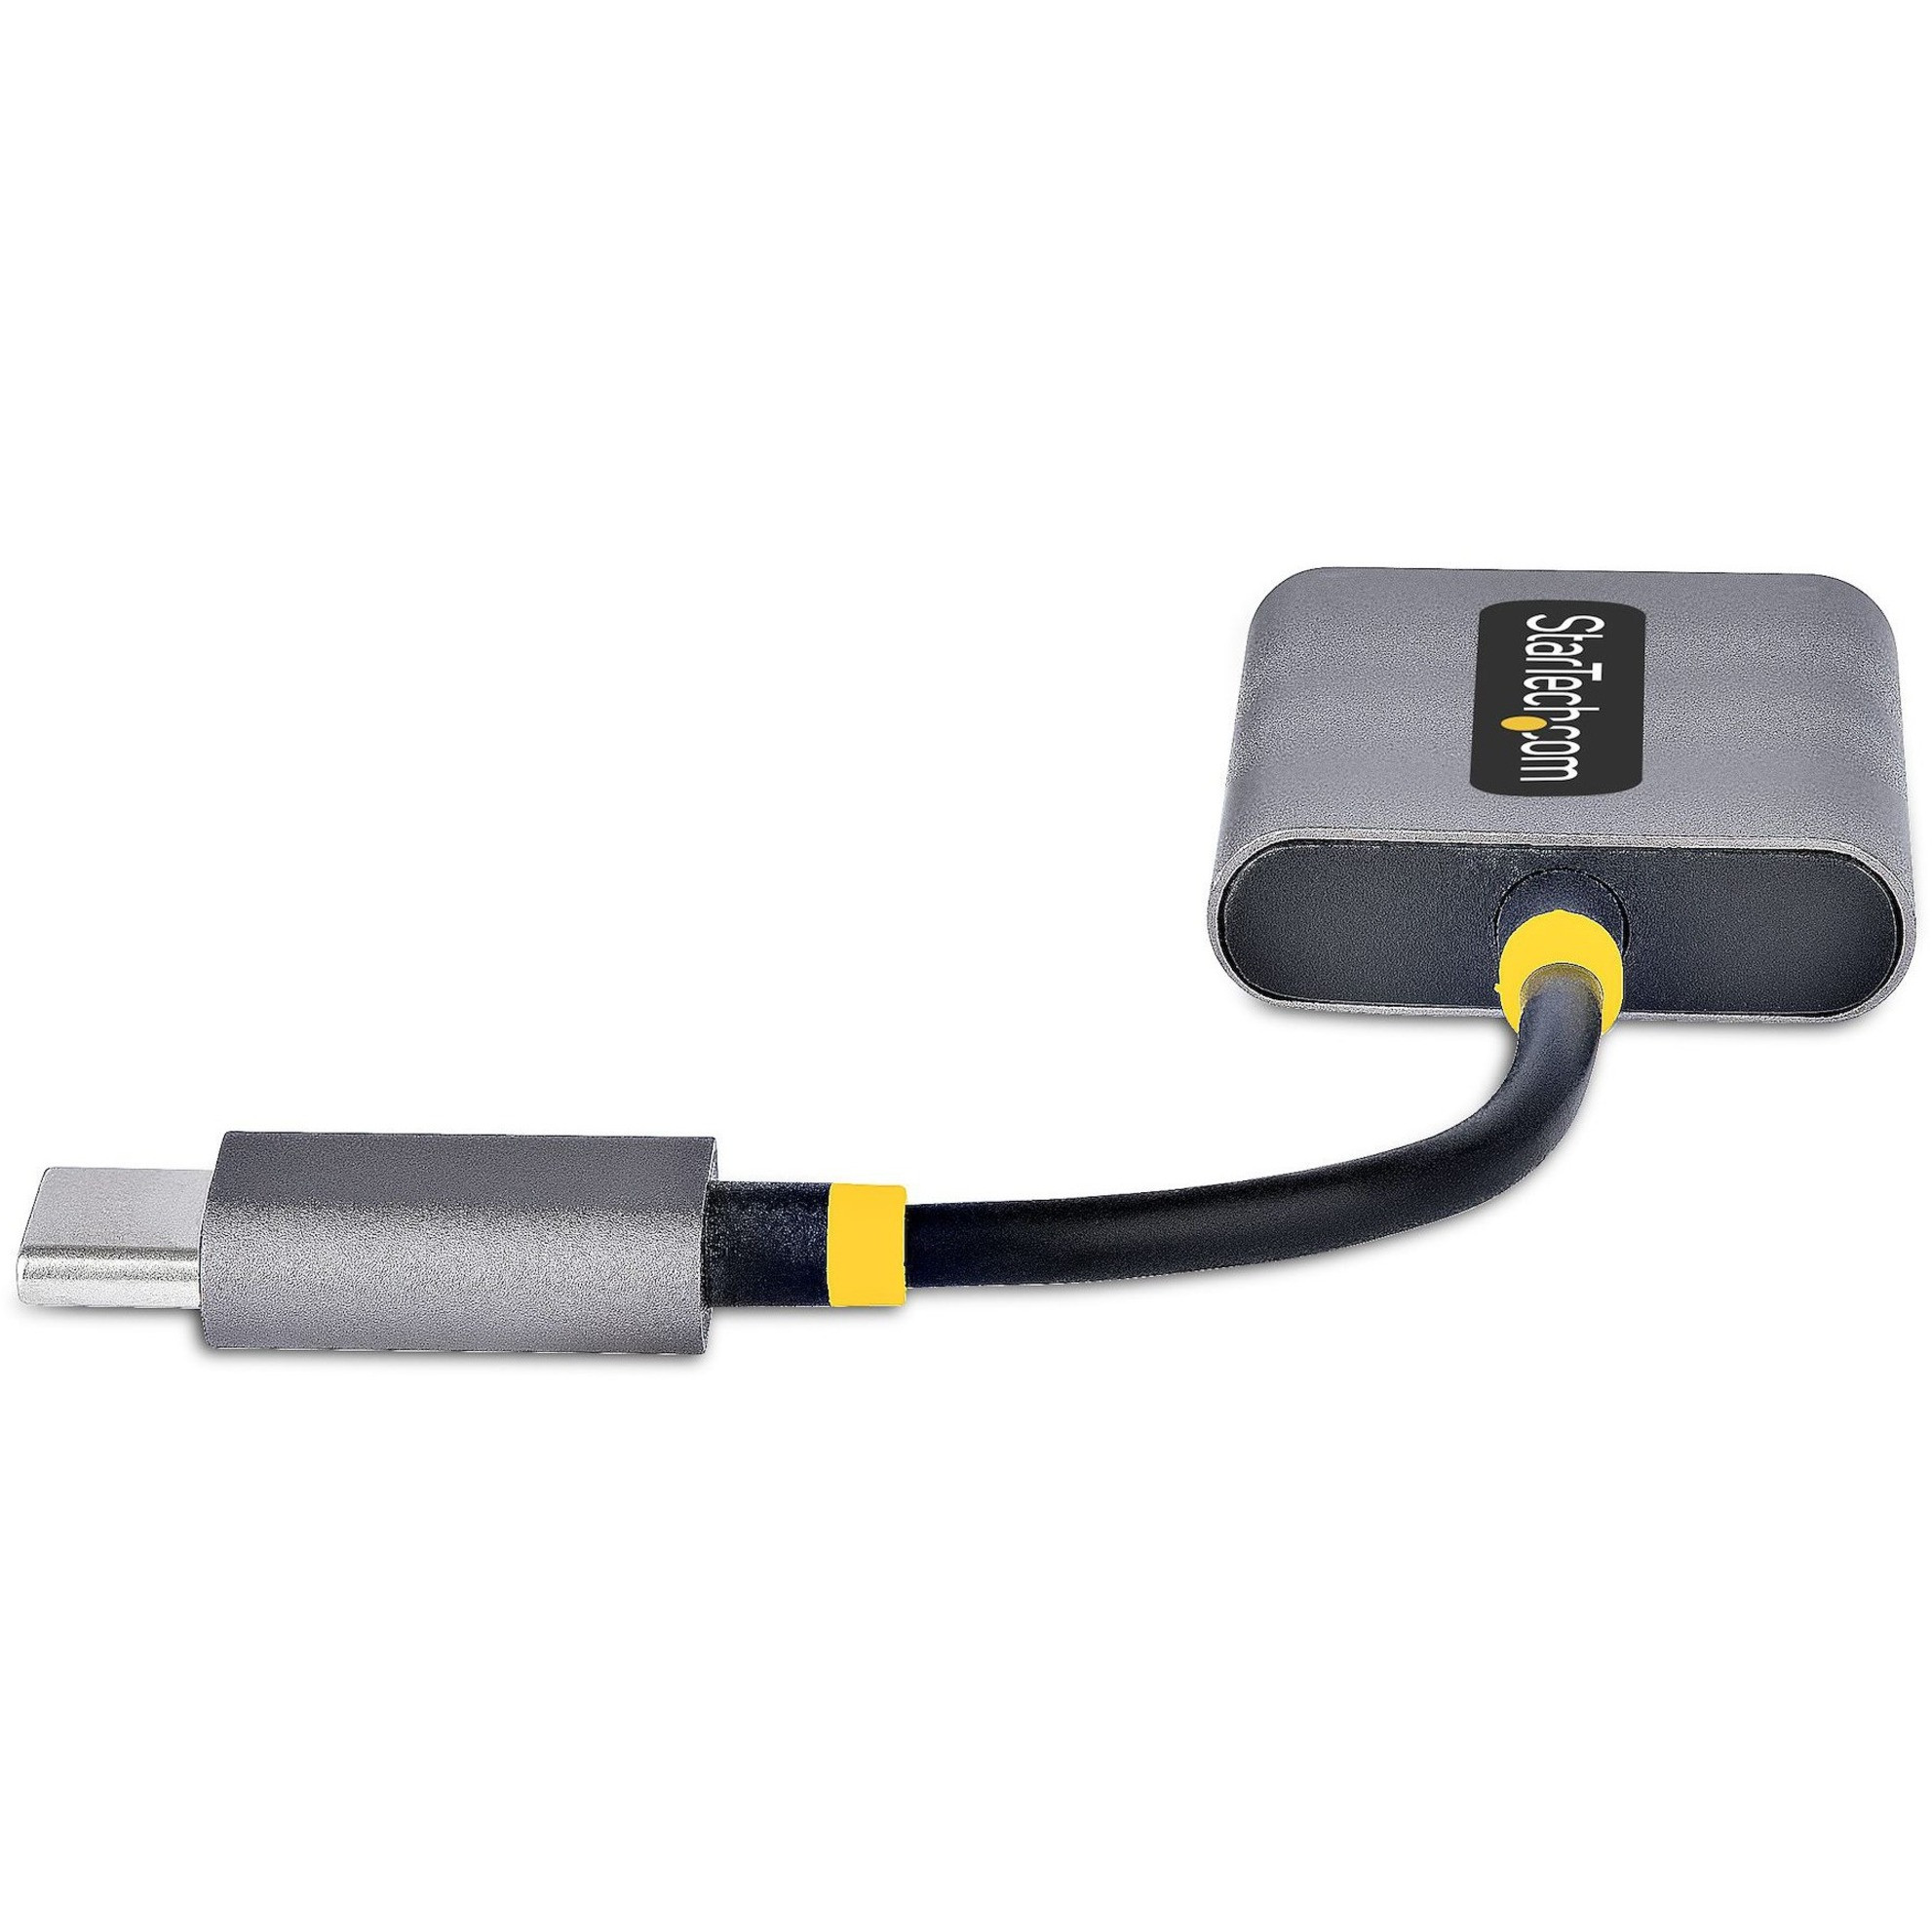 Diagnose Beregn Mistillid Startech .com USB-C Headphone Splitter, USB Type C Dual Headset Adapter w/Mic  Input, USB C to 3.5mm Audio Adapter/Earphone Dongle/Aux...  USBC-AUDIO-SPLITTER - Corporate Armor